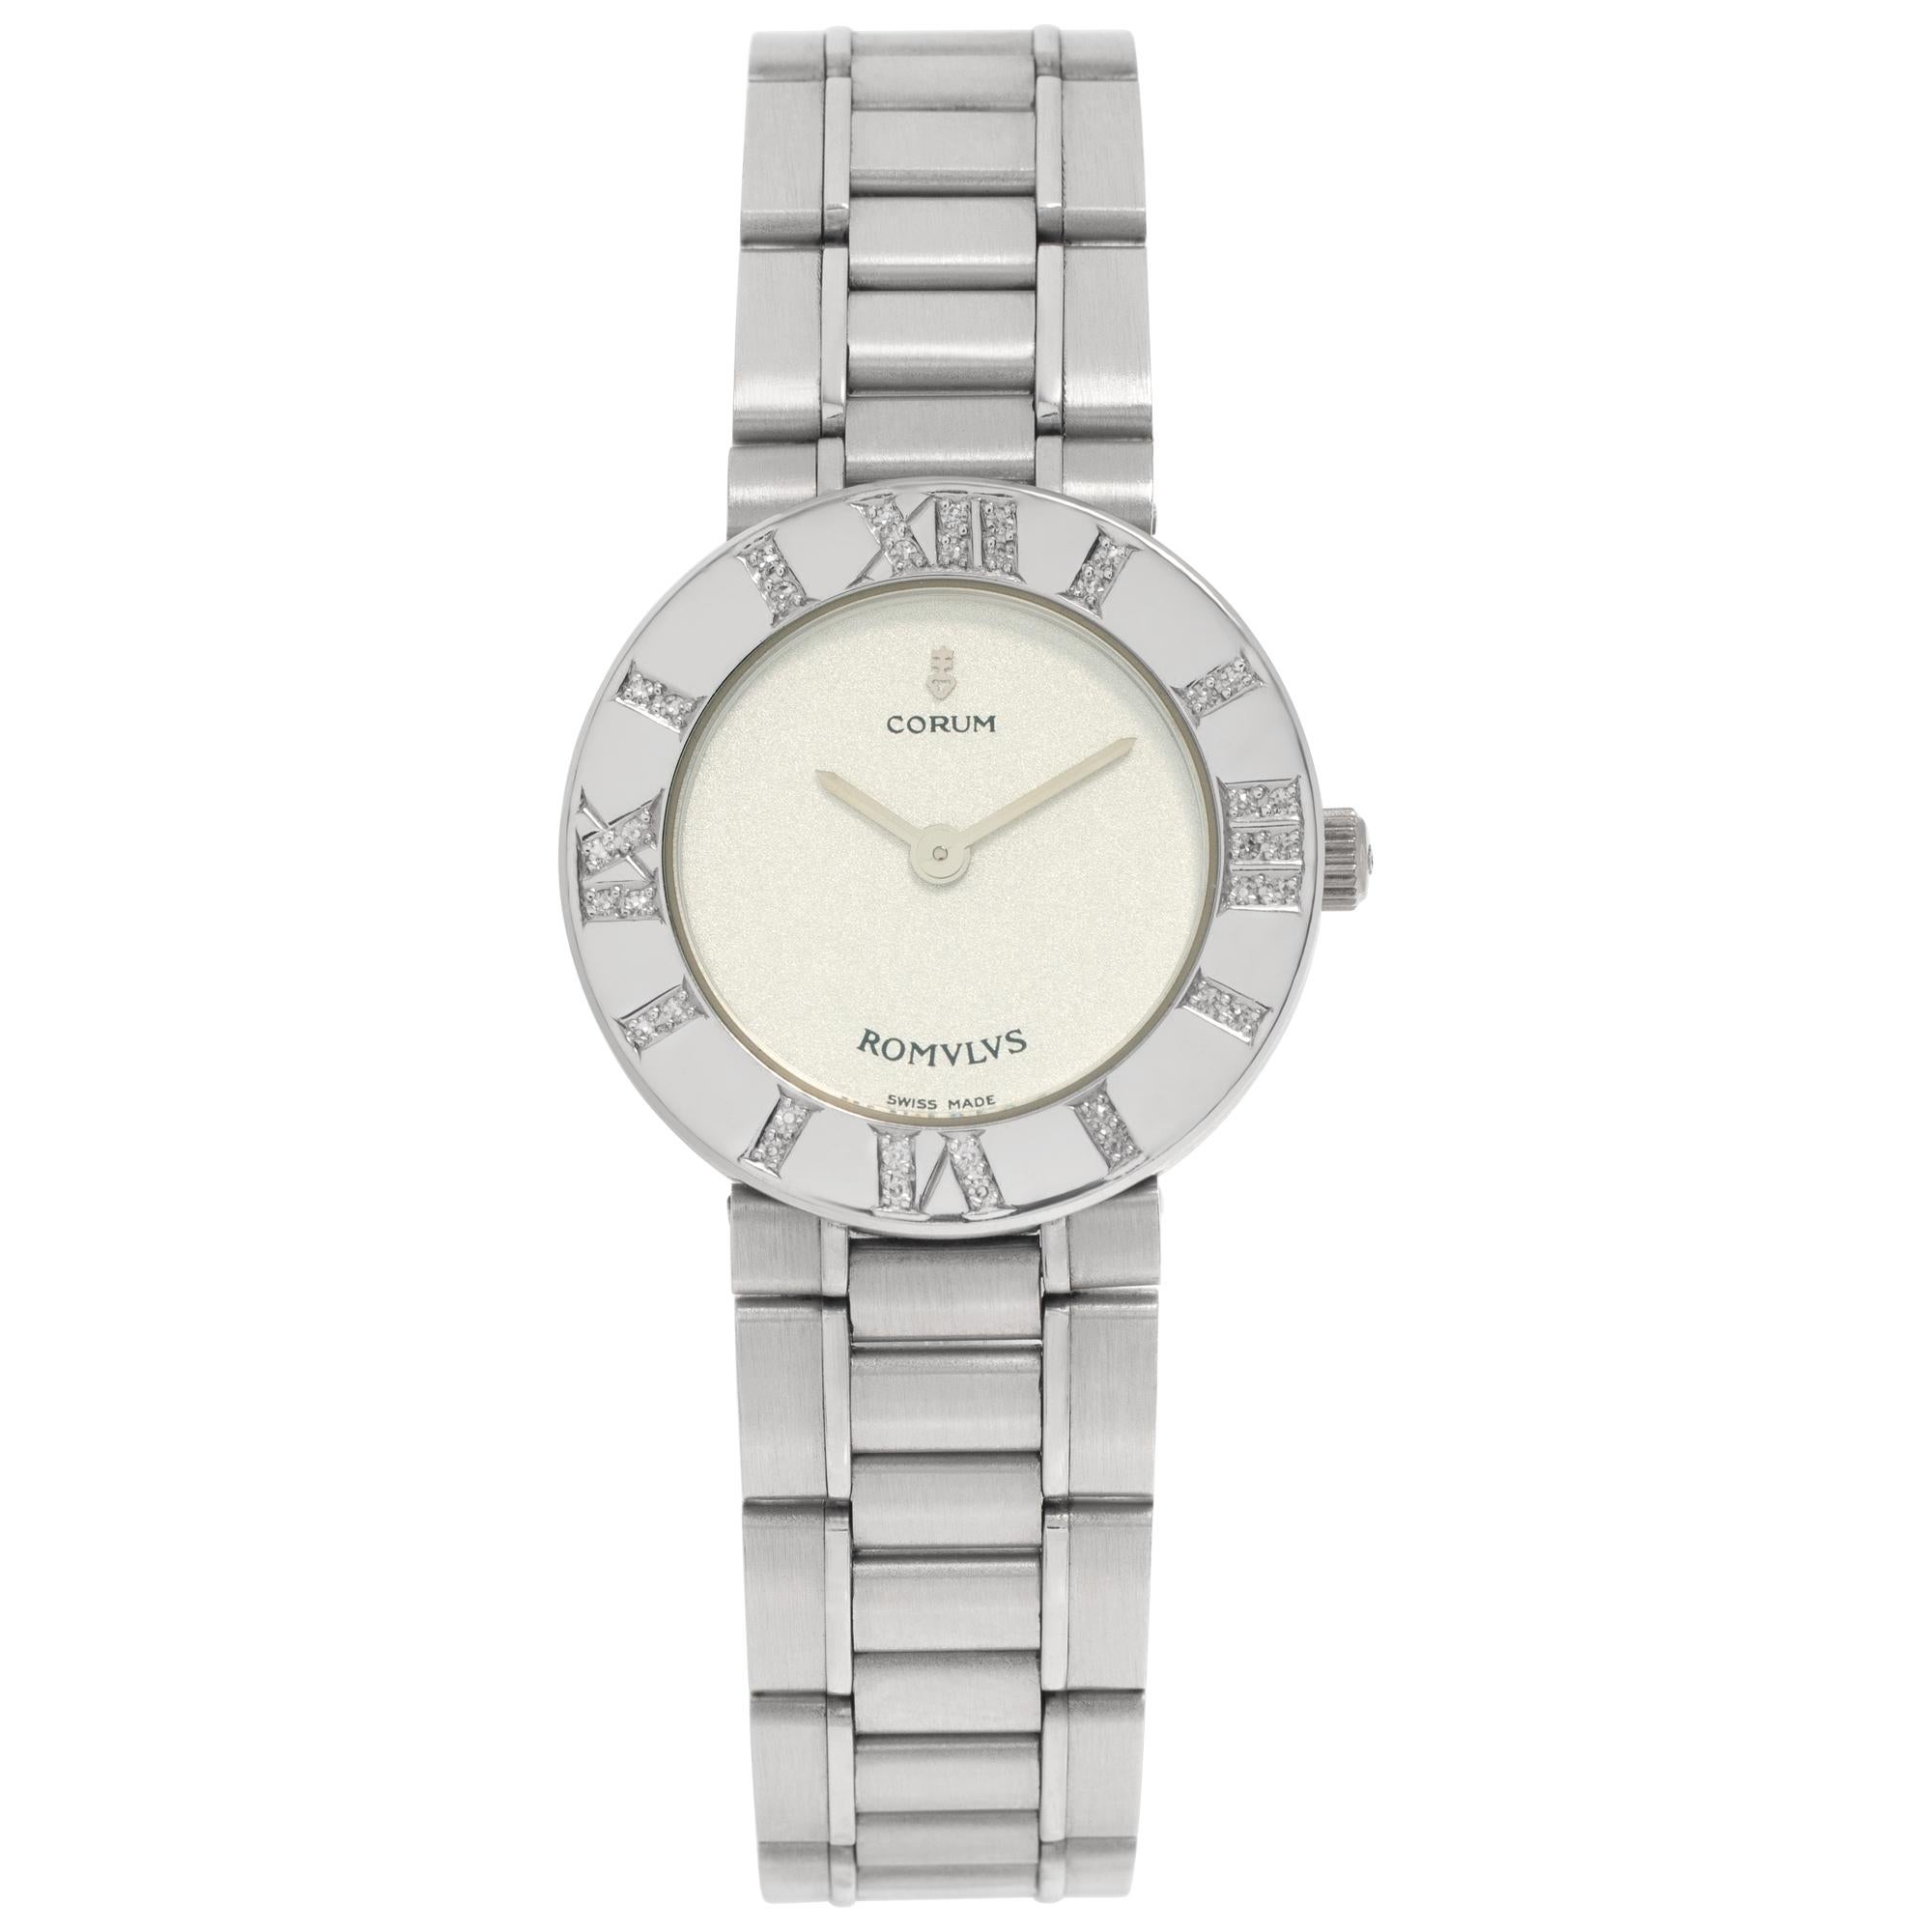 Corum Romvlvs 18k White Gold Wristwatch Ref 165 121 69 V400 For Sale